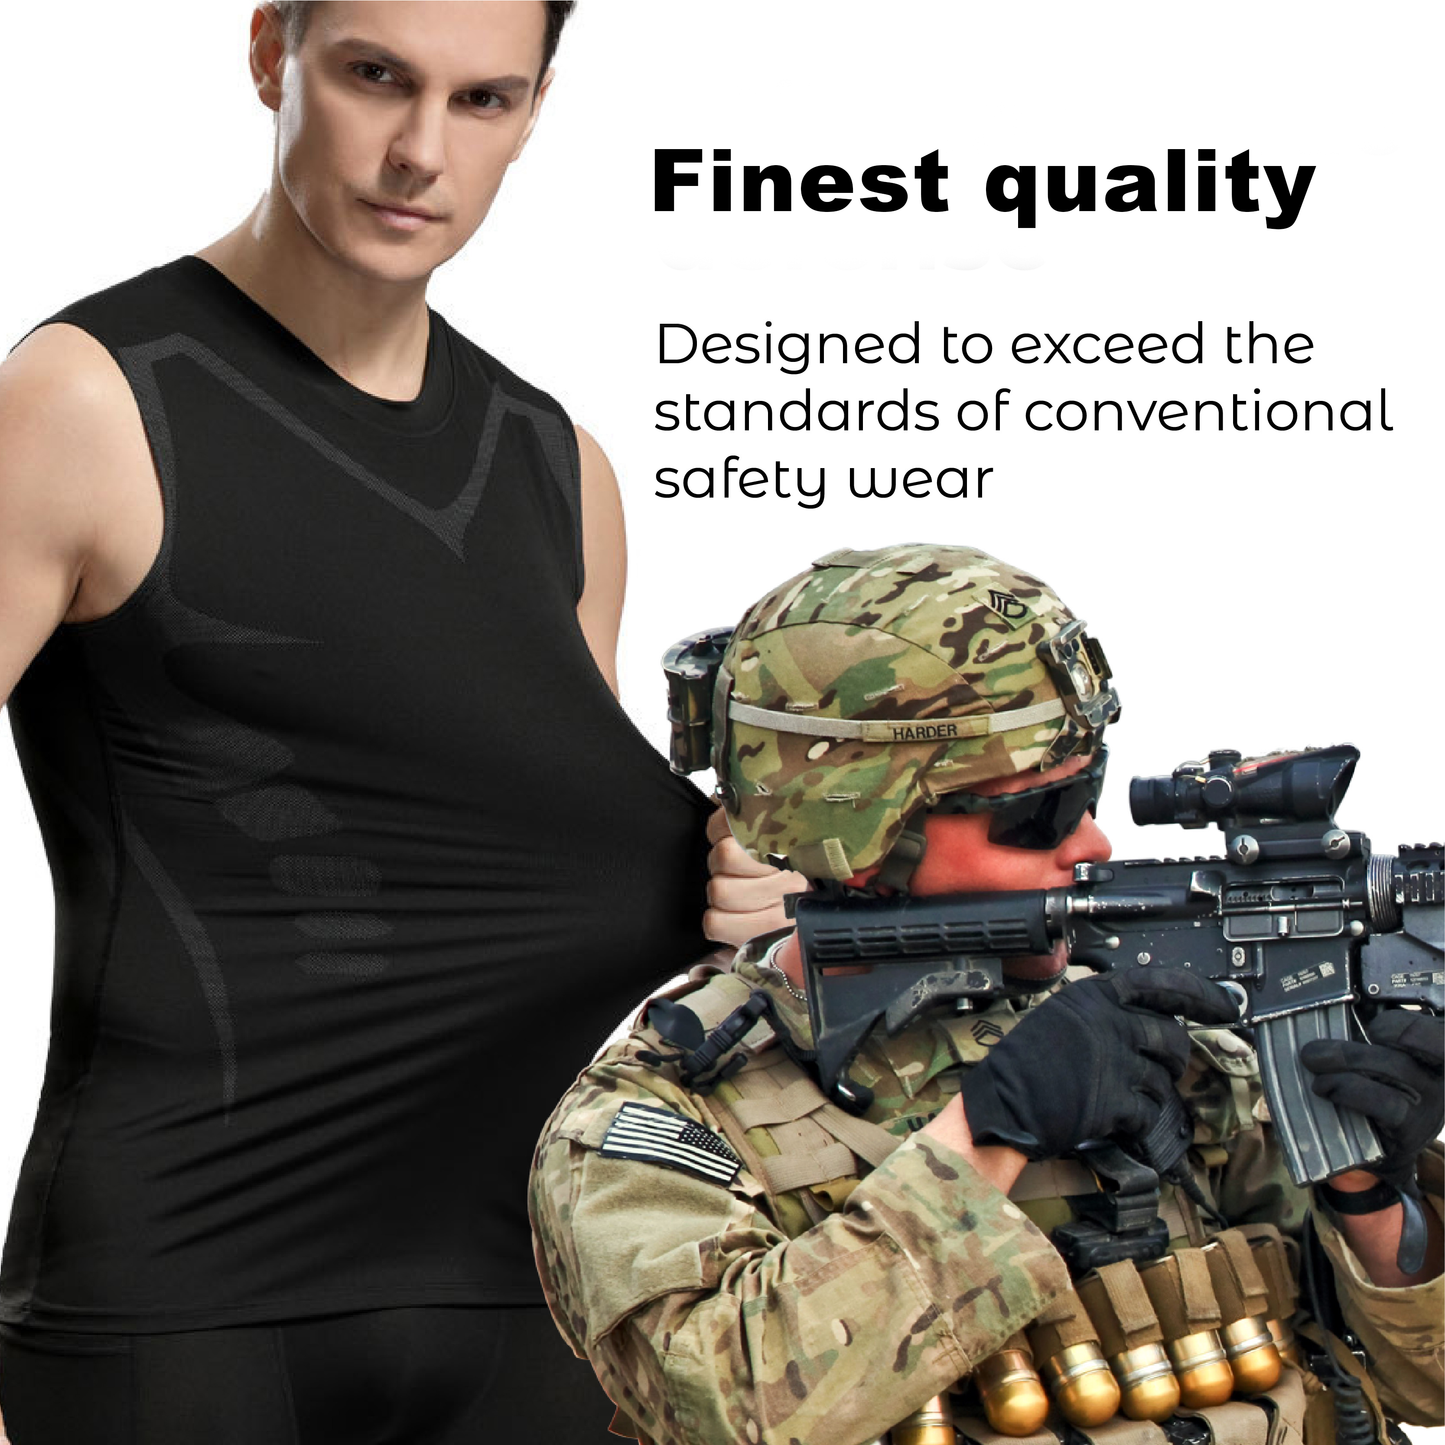 RICPIND Nano Protect Armorer Guardian Vest